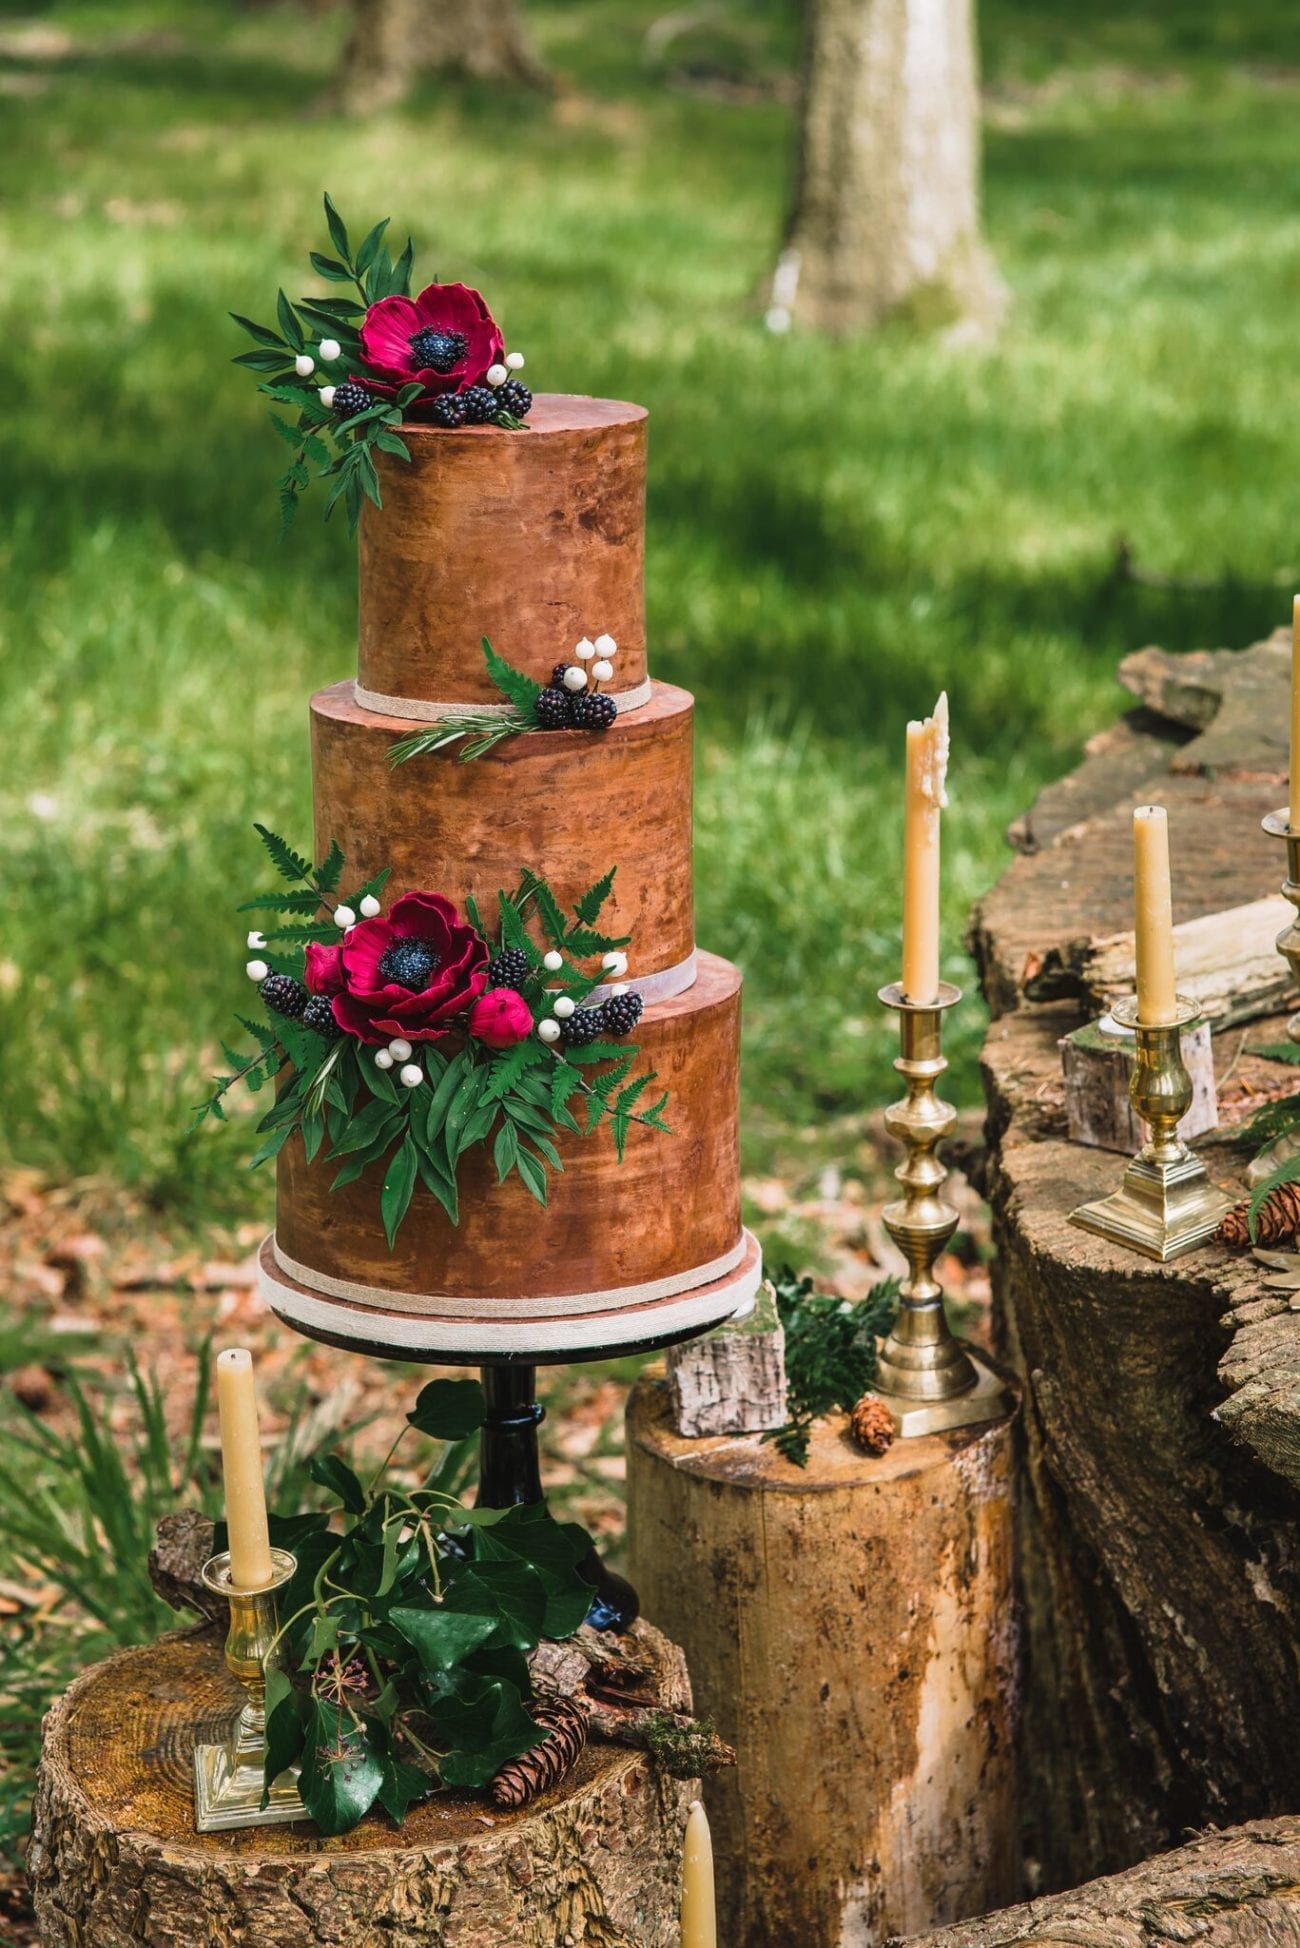 How To Create The Ultimate Wedding Dessert Table - Hayley Elizabeth Design